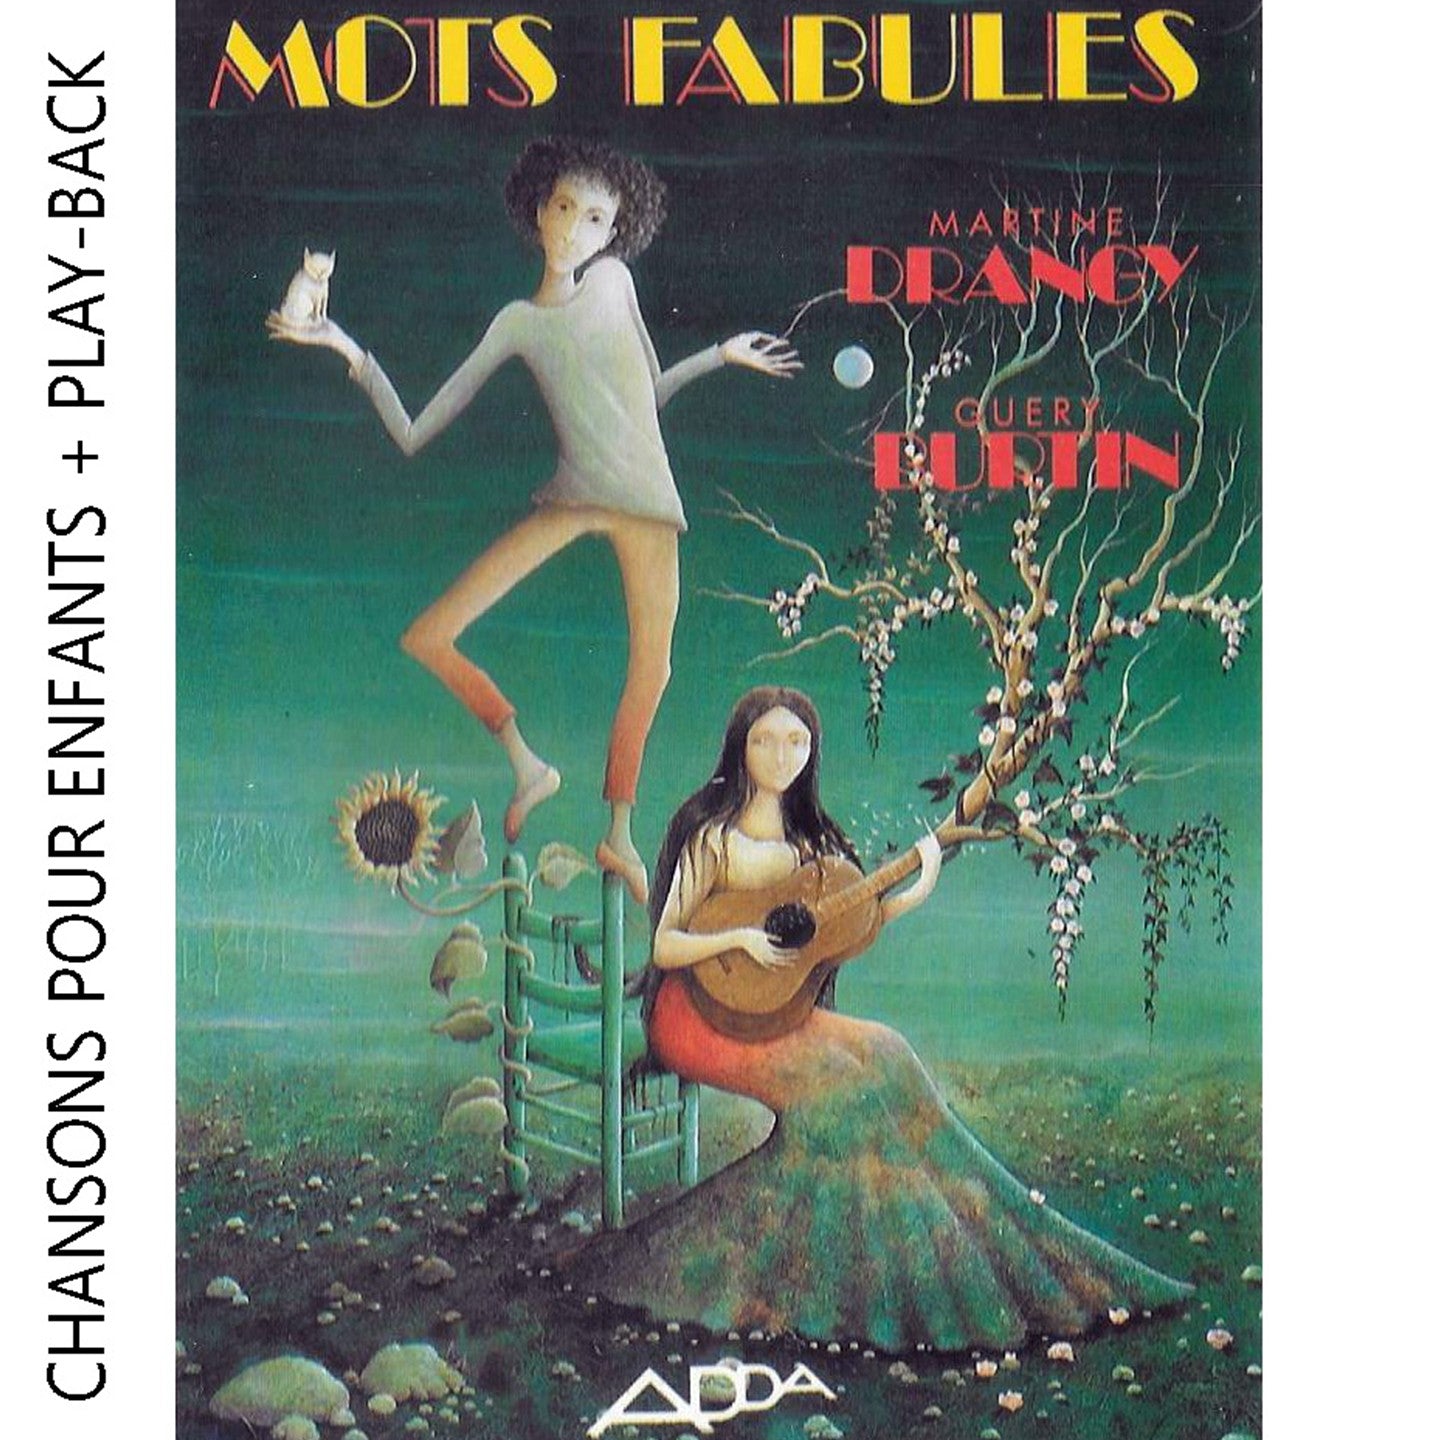 Pochette de : MOTS FABULES - MARTINE DRANGY / GUERY BURTIN (CD)